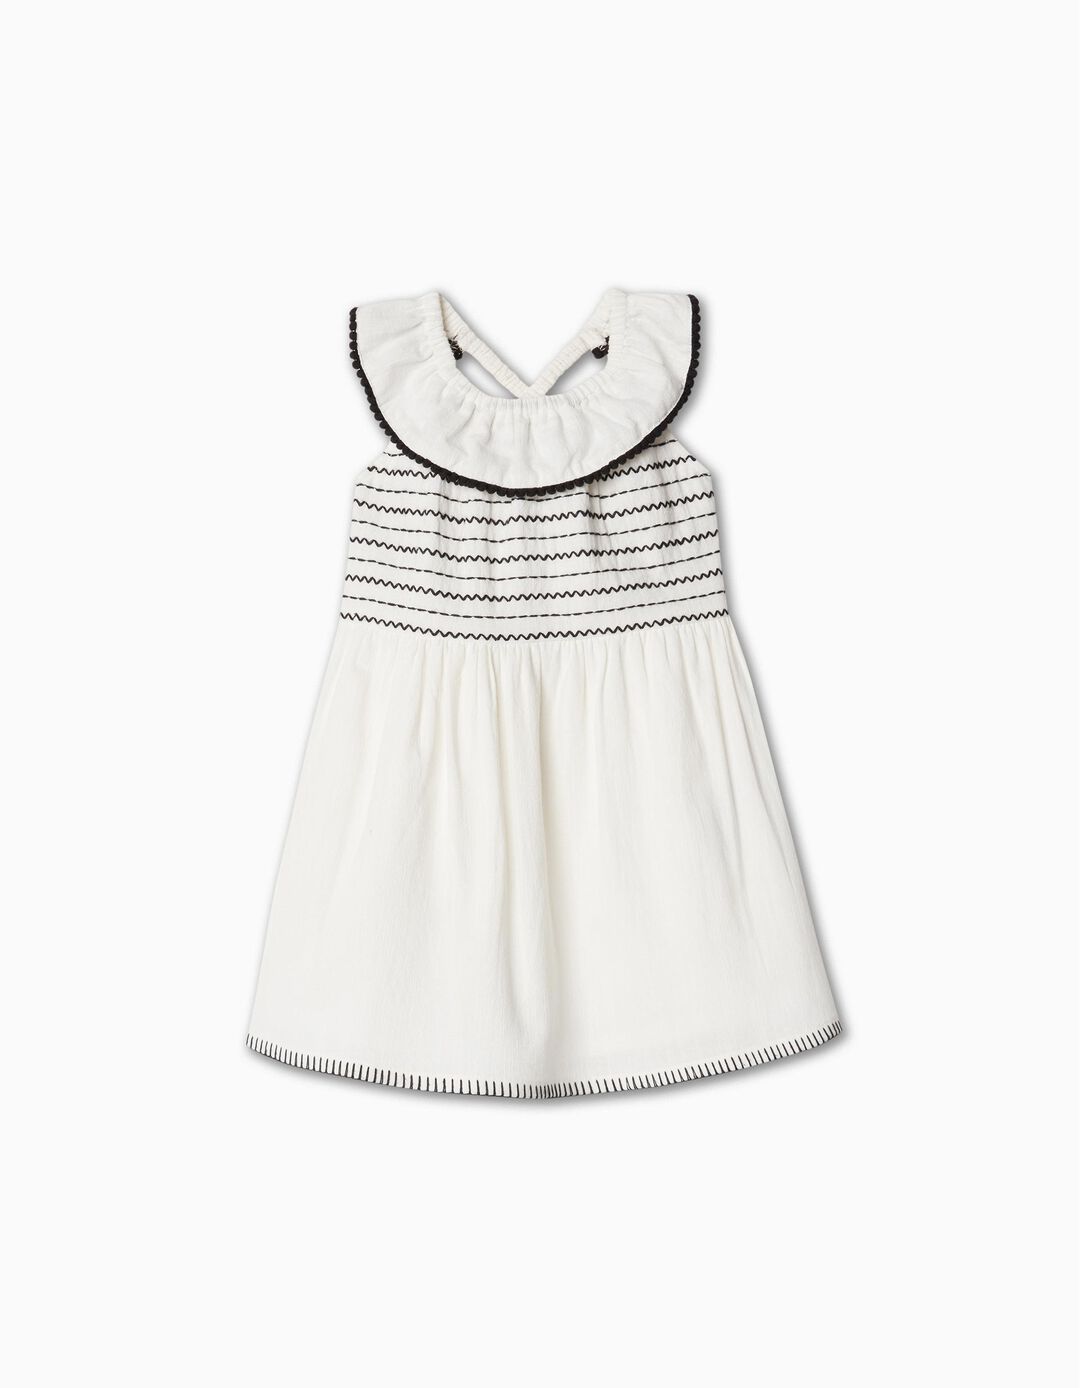 Rustic Frill Dress, Baby Girl, White